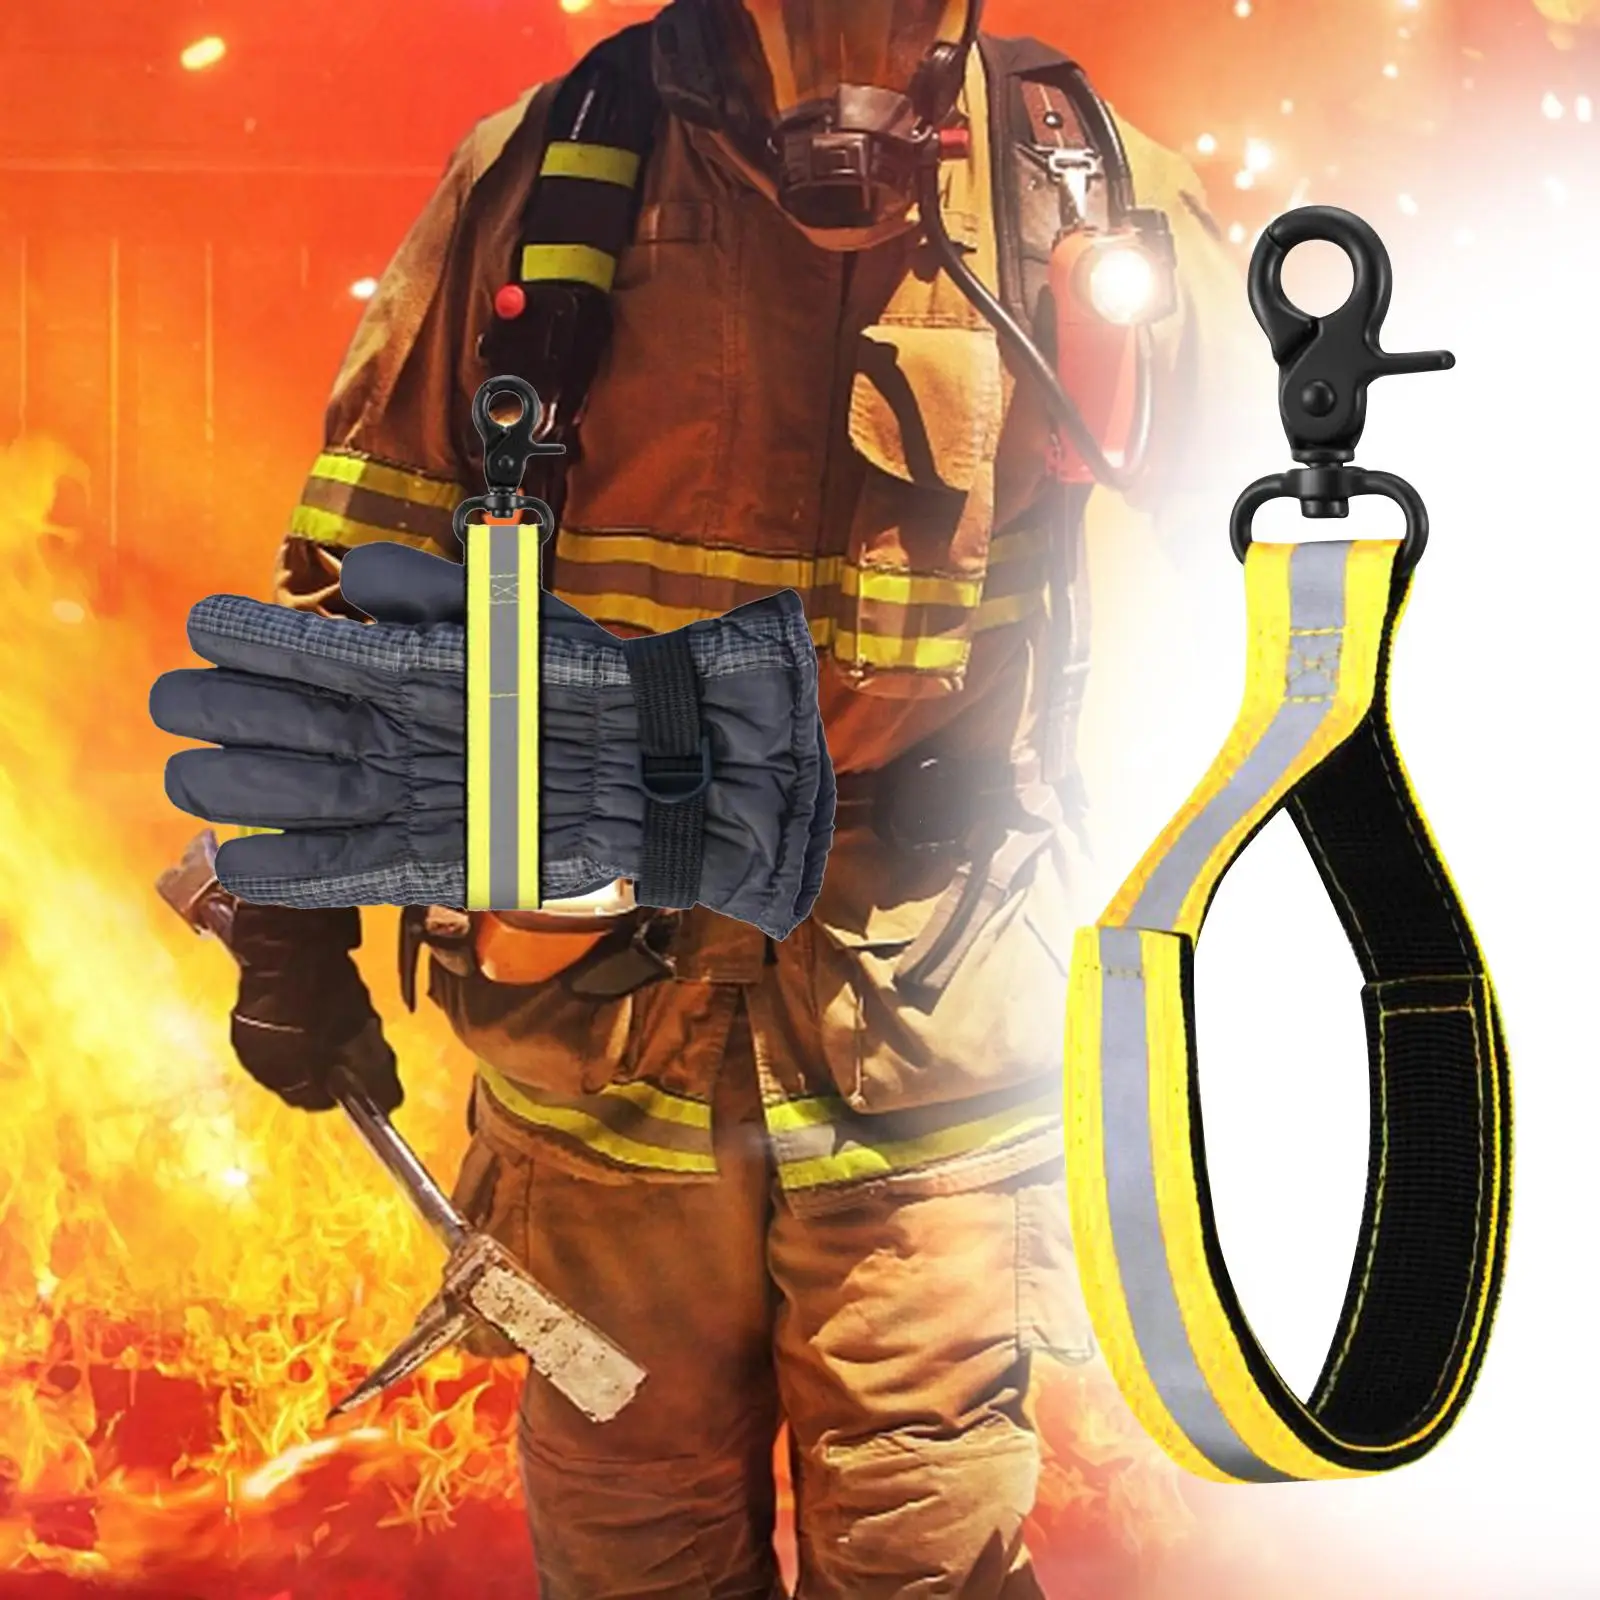 Firefighter Glove Strap Turnout Gear Outdoor Tool Heavy Duty Portable Firefighter Work Glove Holder for Welding Gloves Supplies